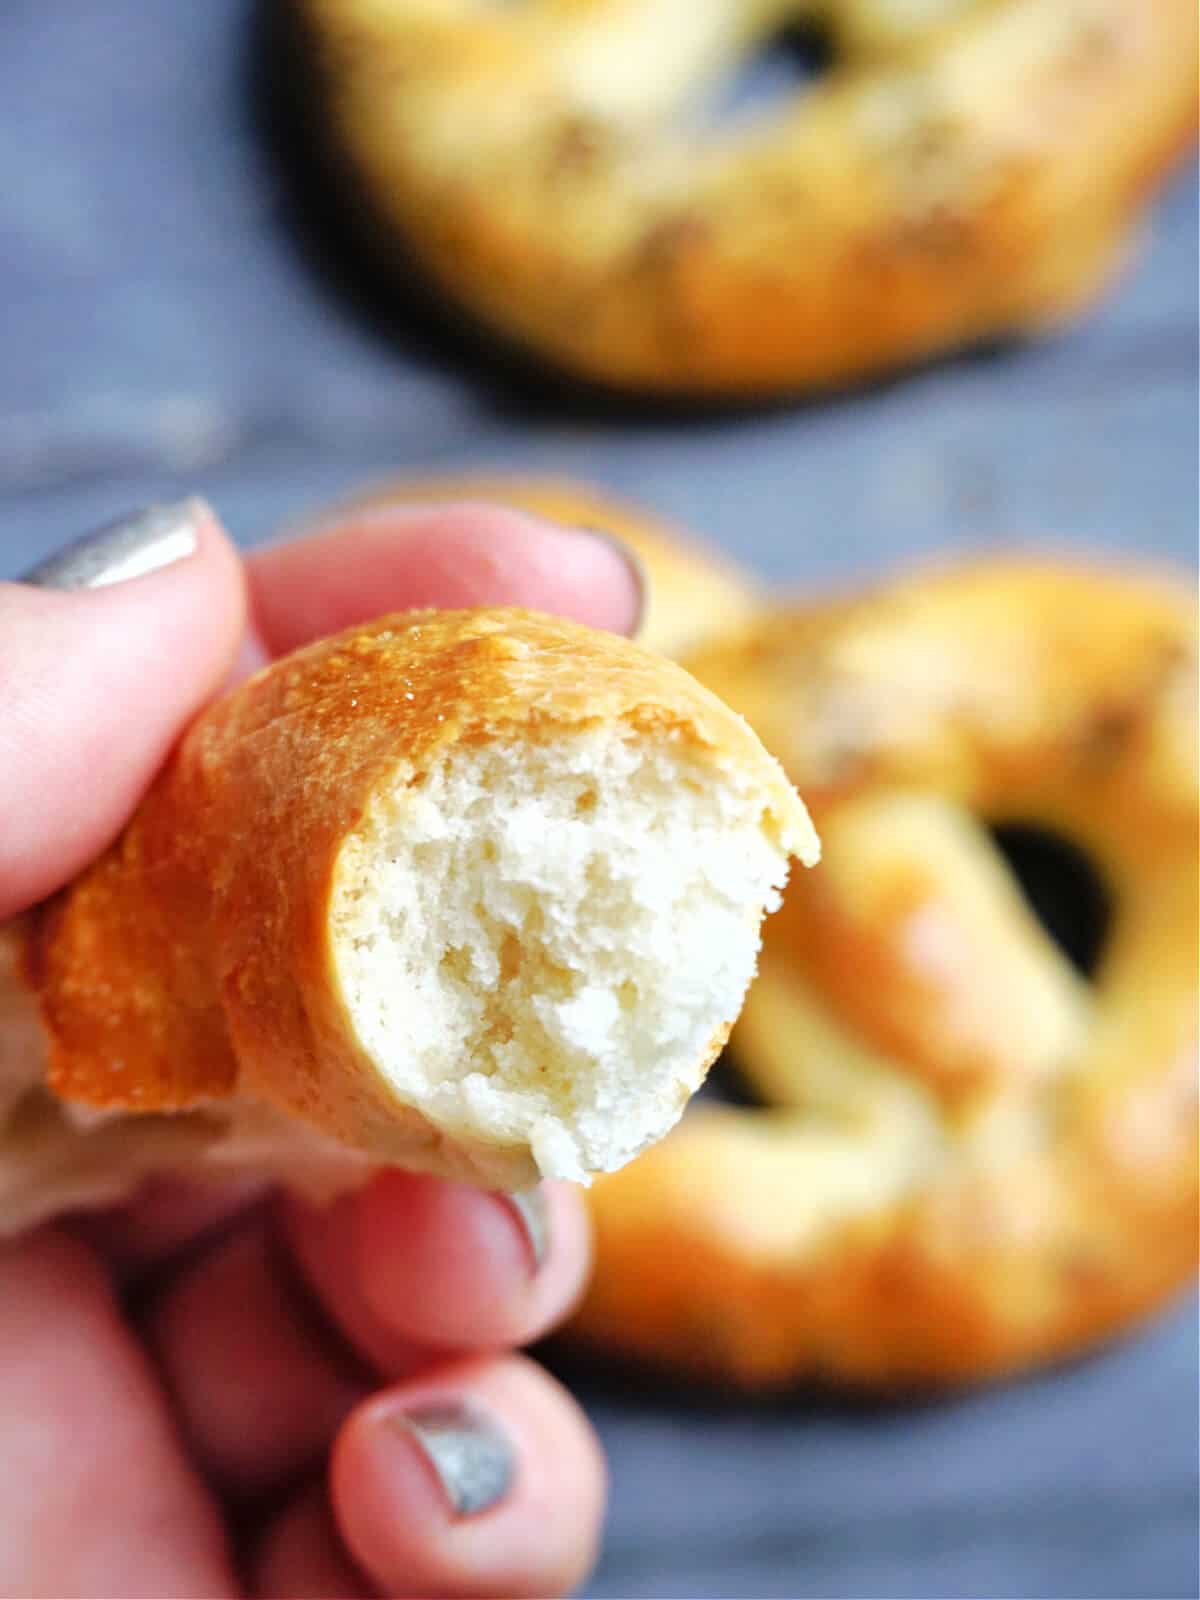 Half a pretzel to show how soft they are inside.